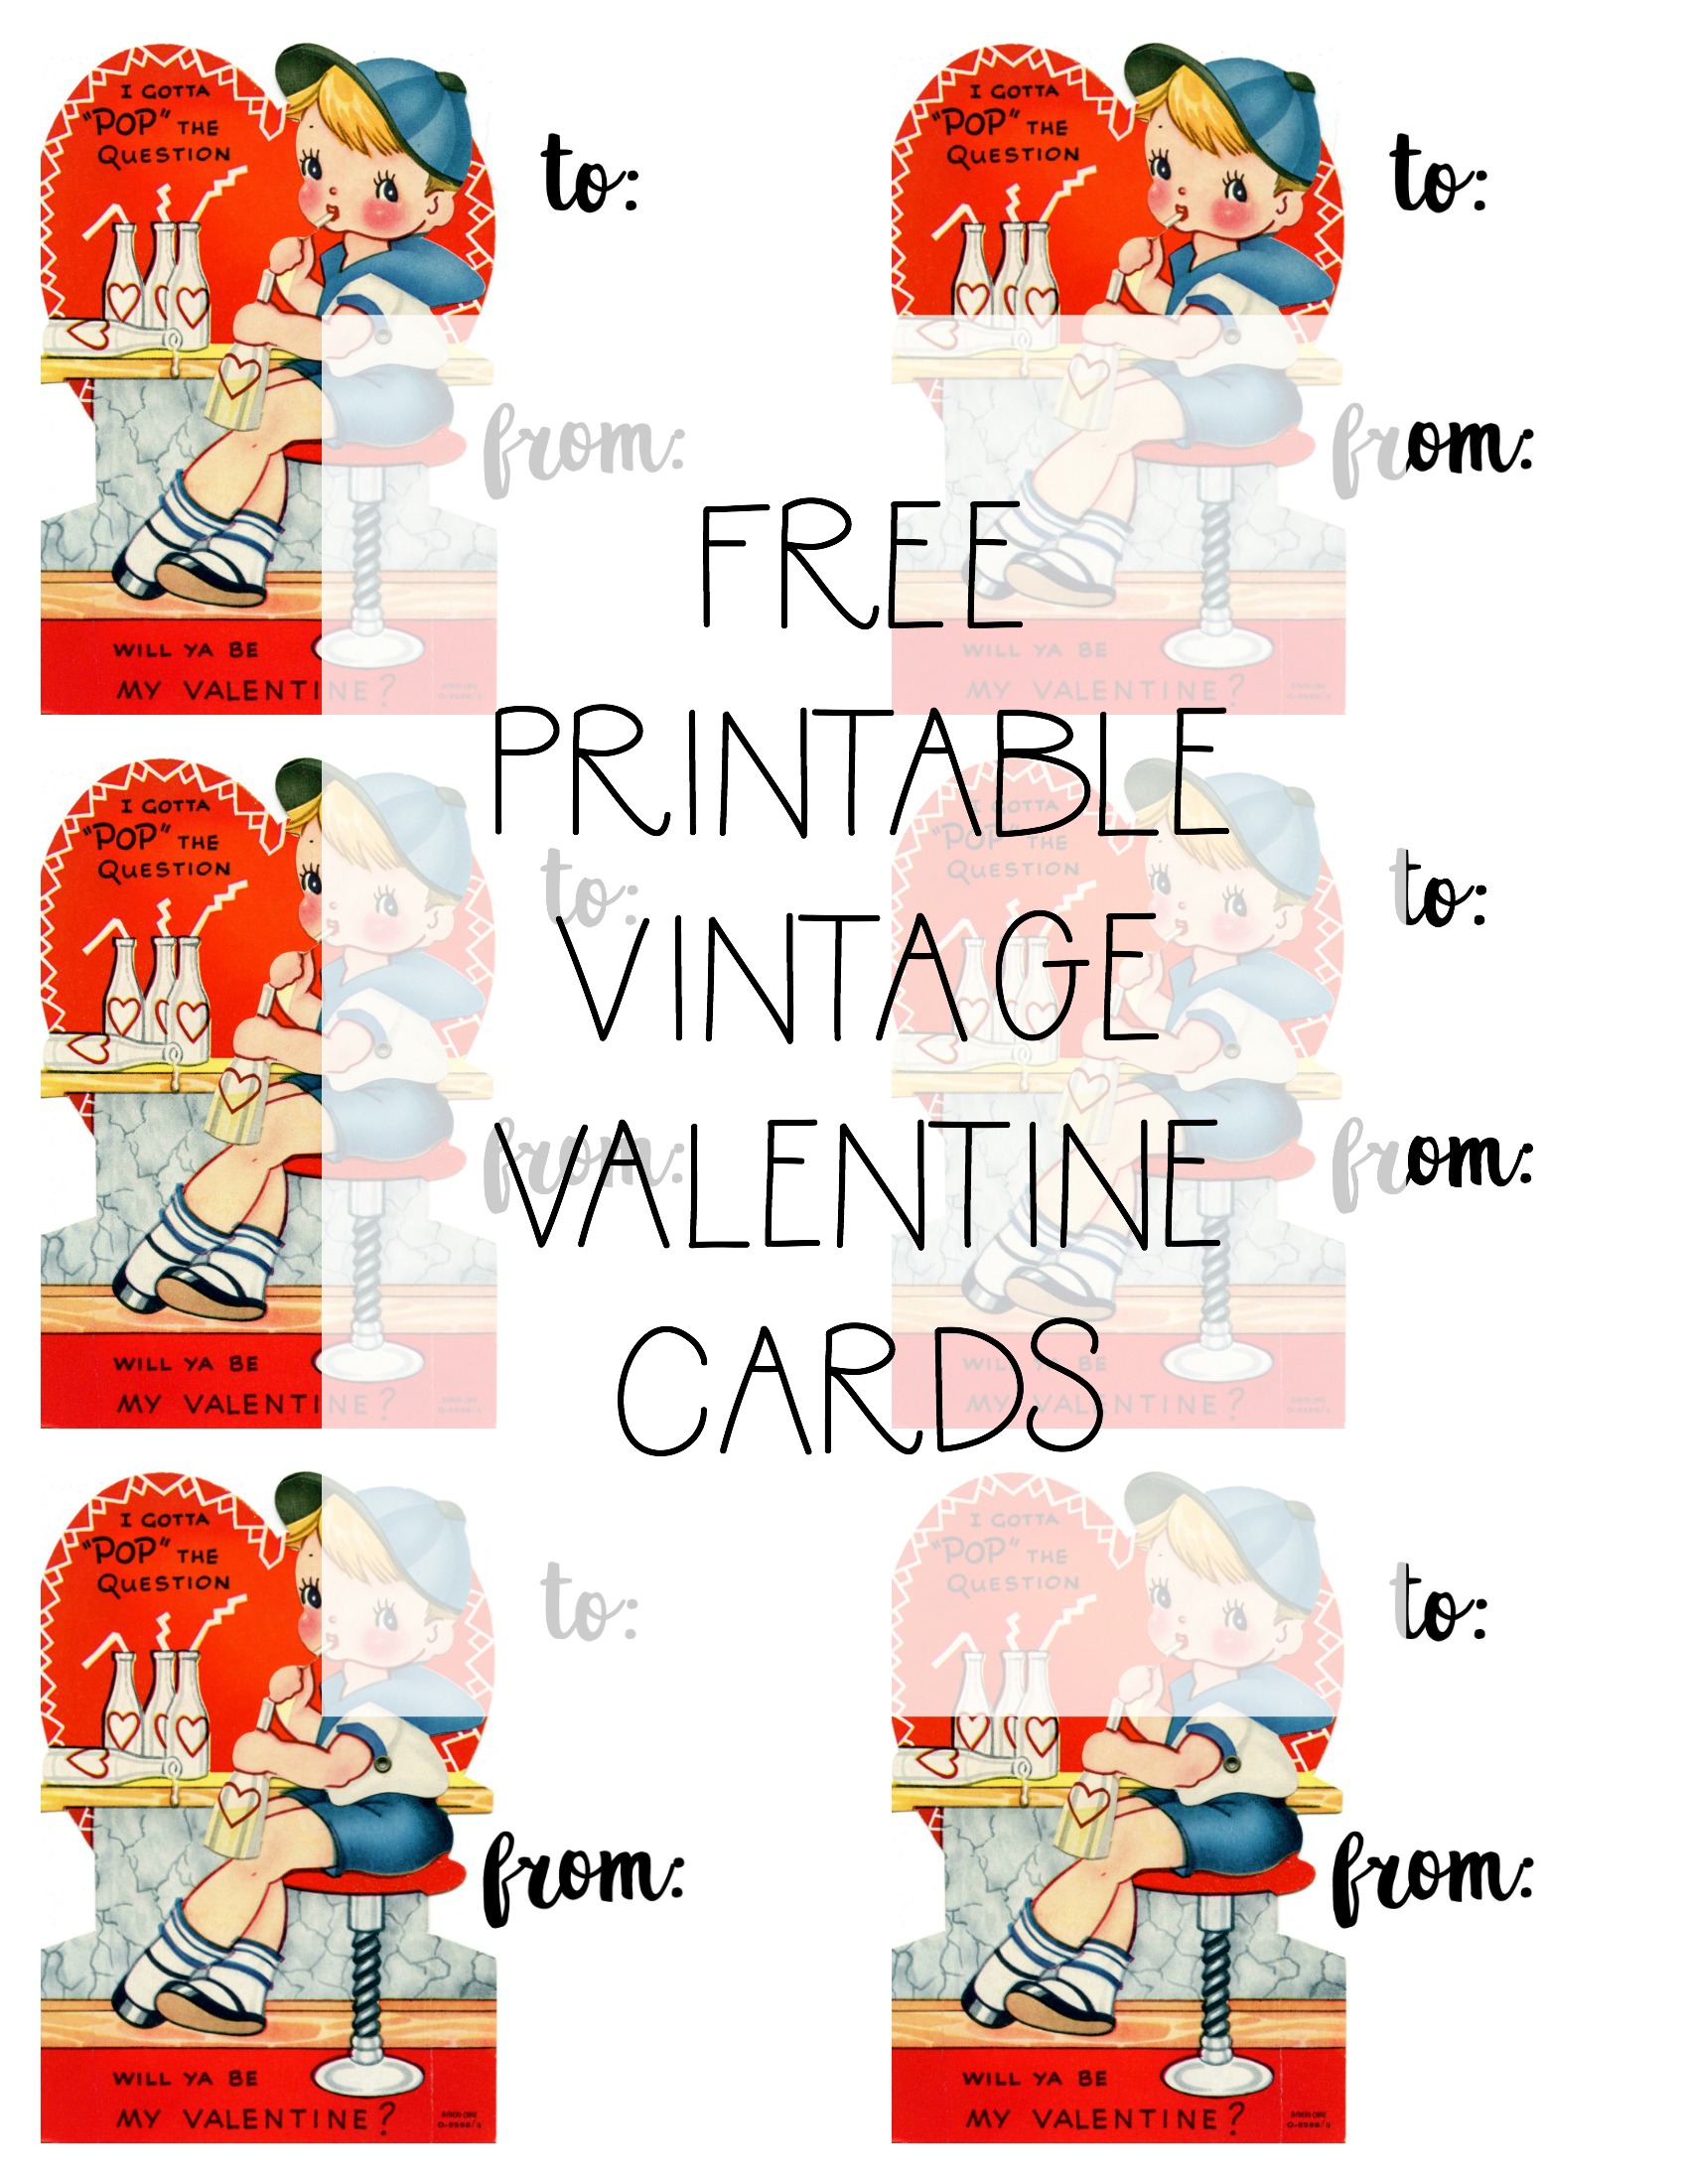 Free Printable Vintage Valentine Cards graphic.